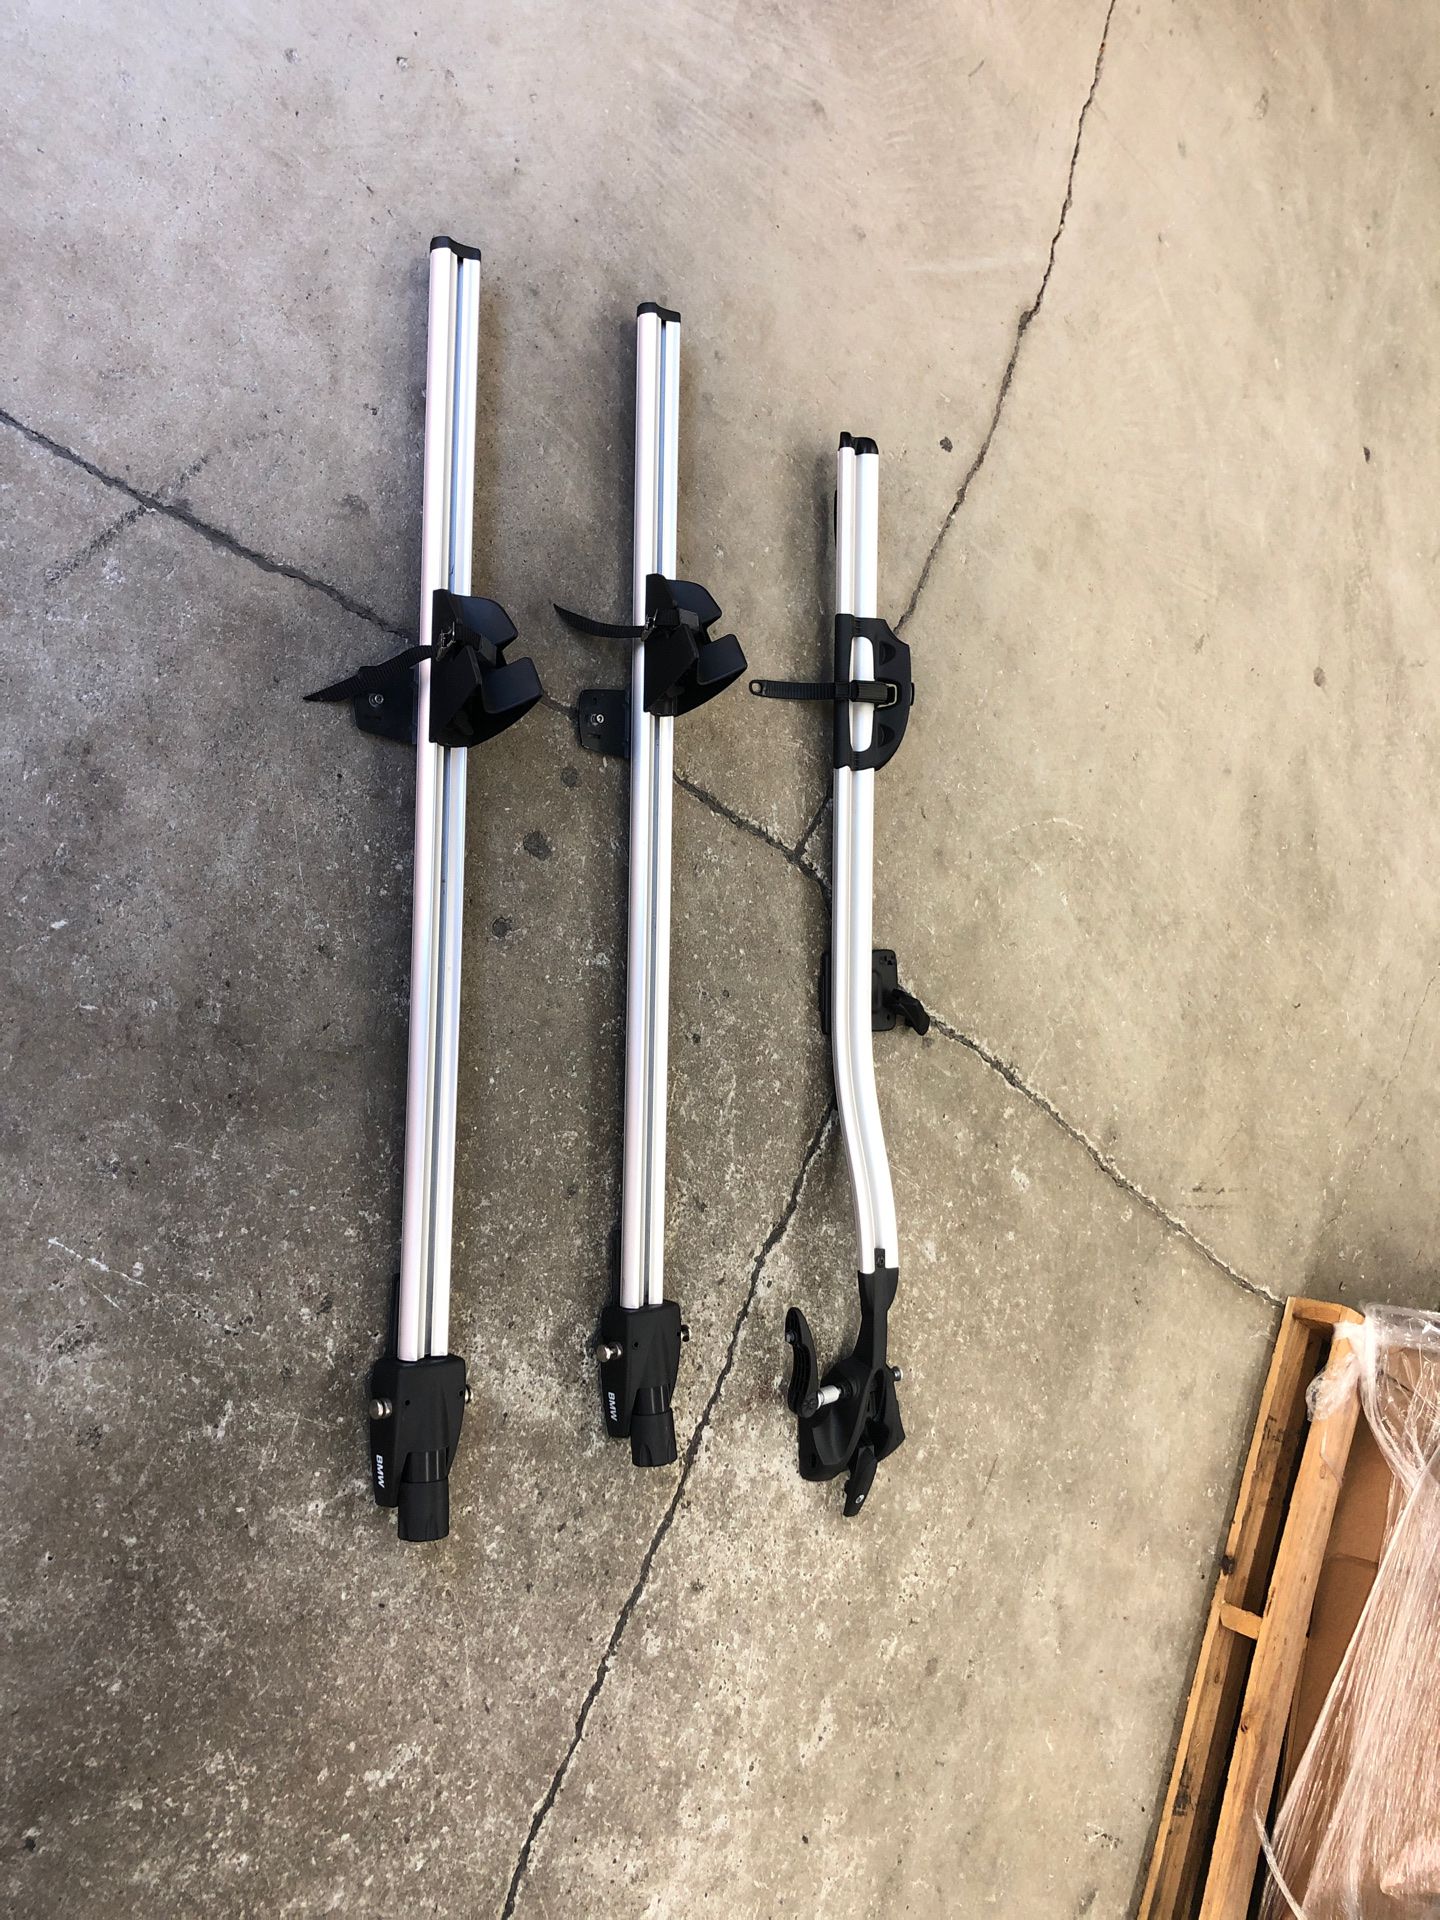 BMW fork mount bike racks for t track bars only